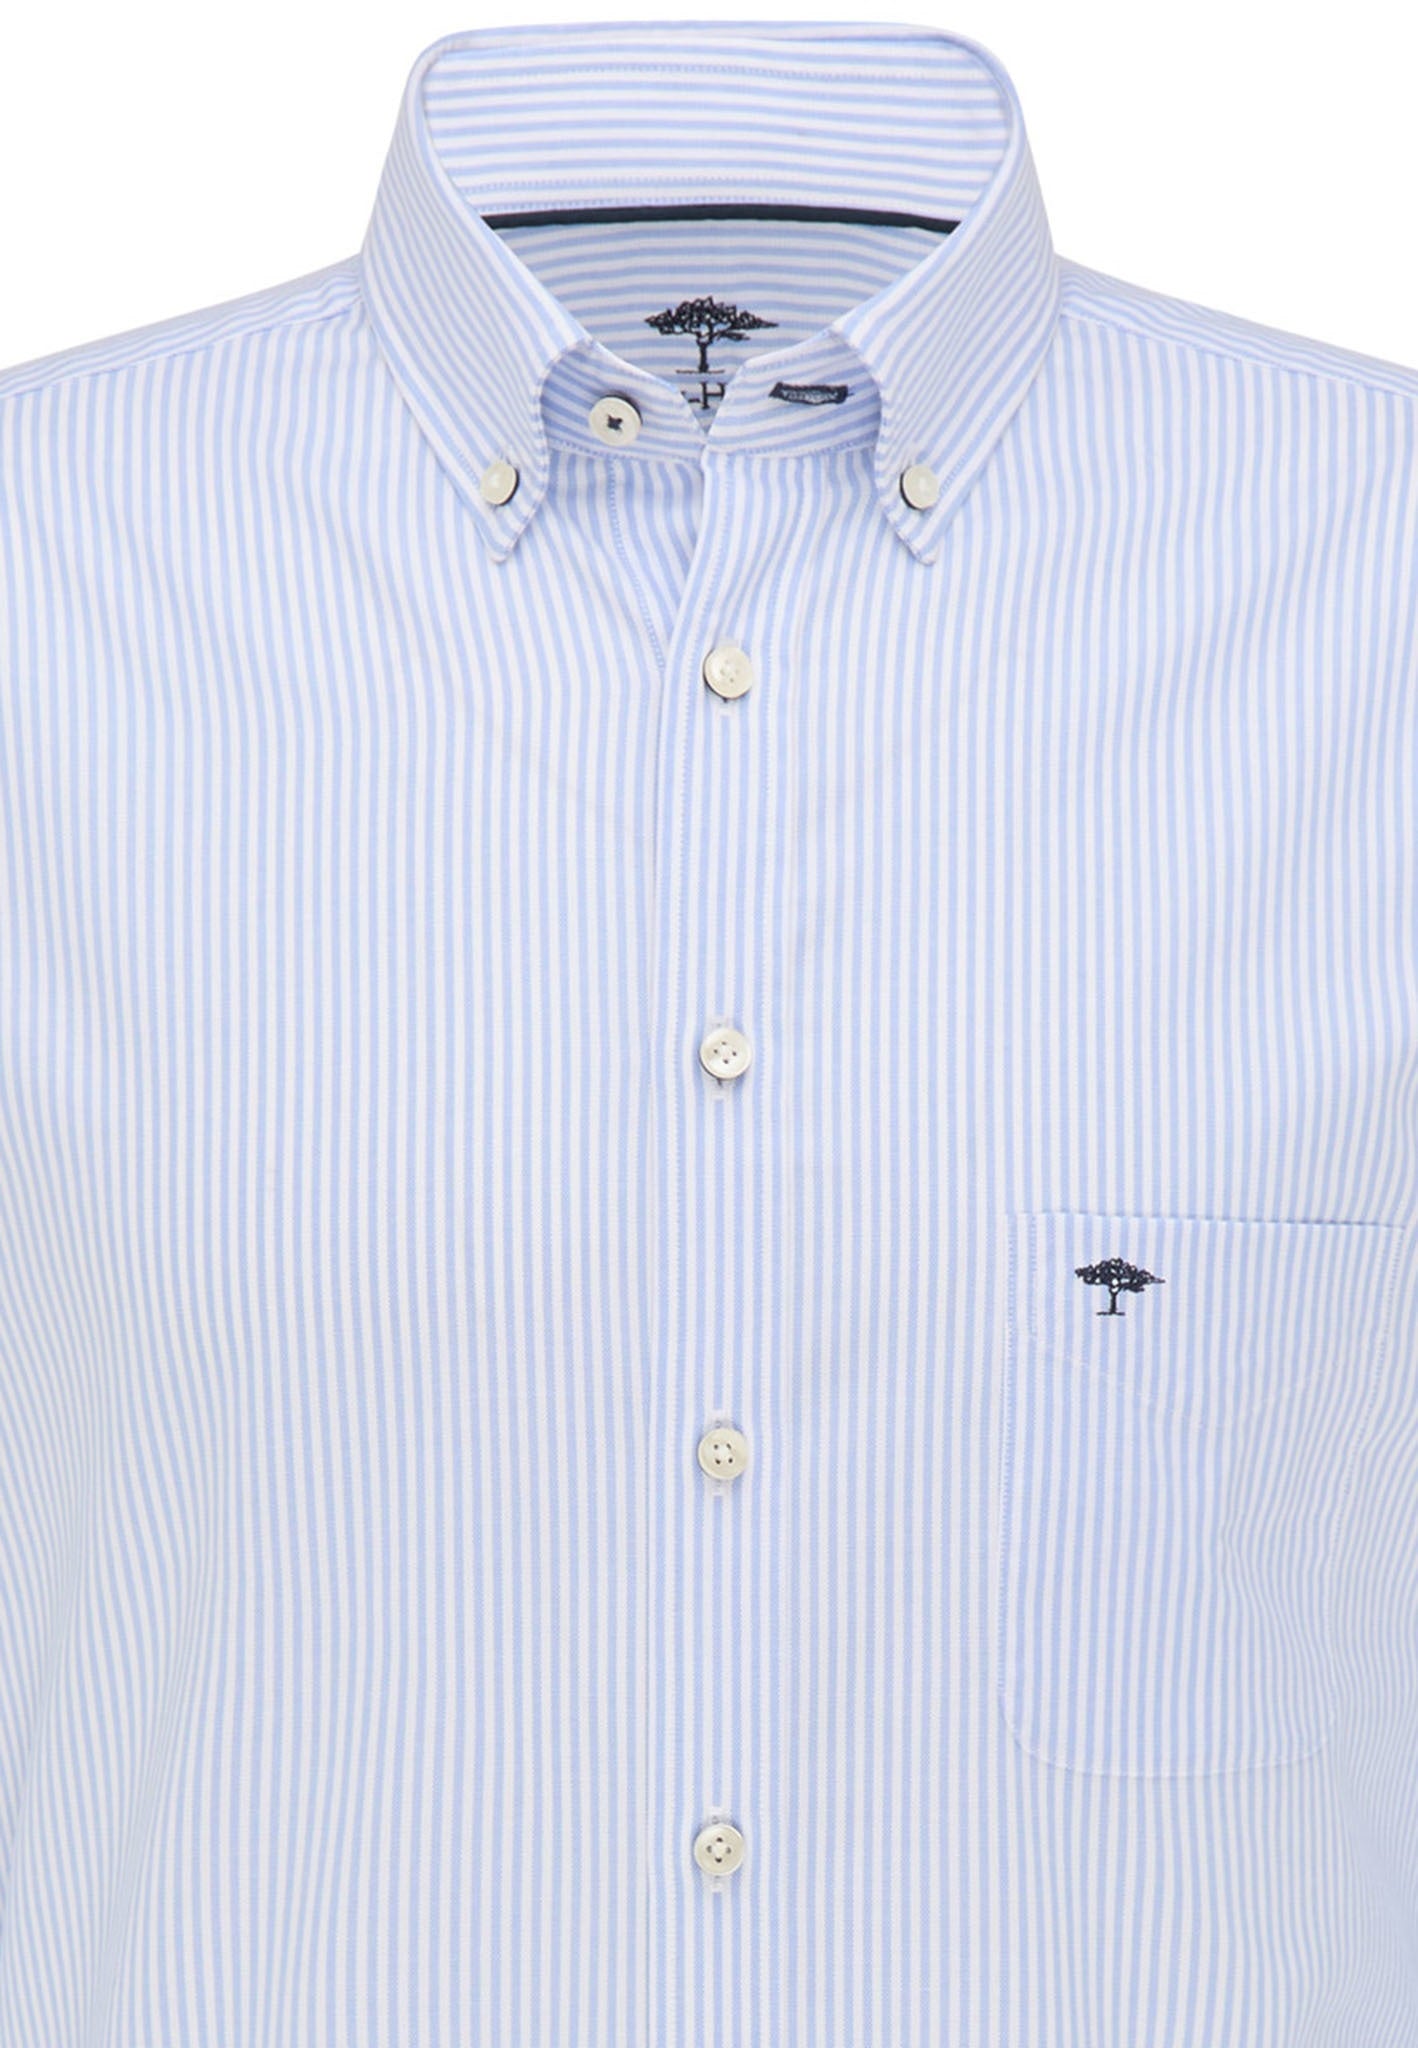 FYNCH HATTON Oxford Shirt - Men's Soft Cotton – Light Blue Stripe